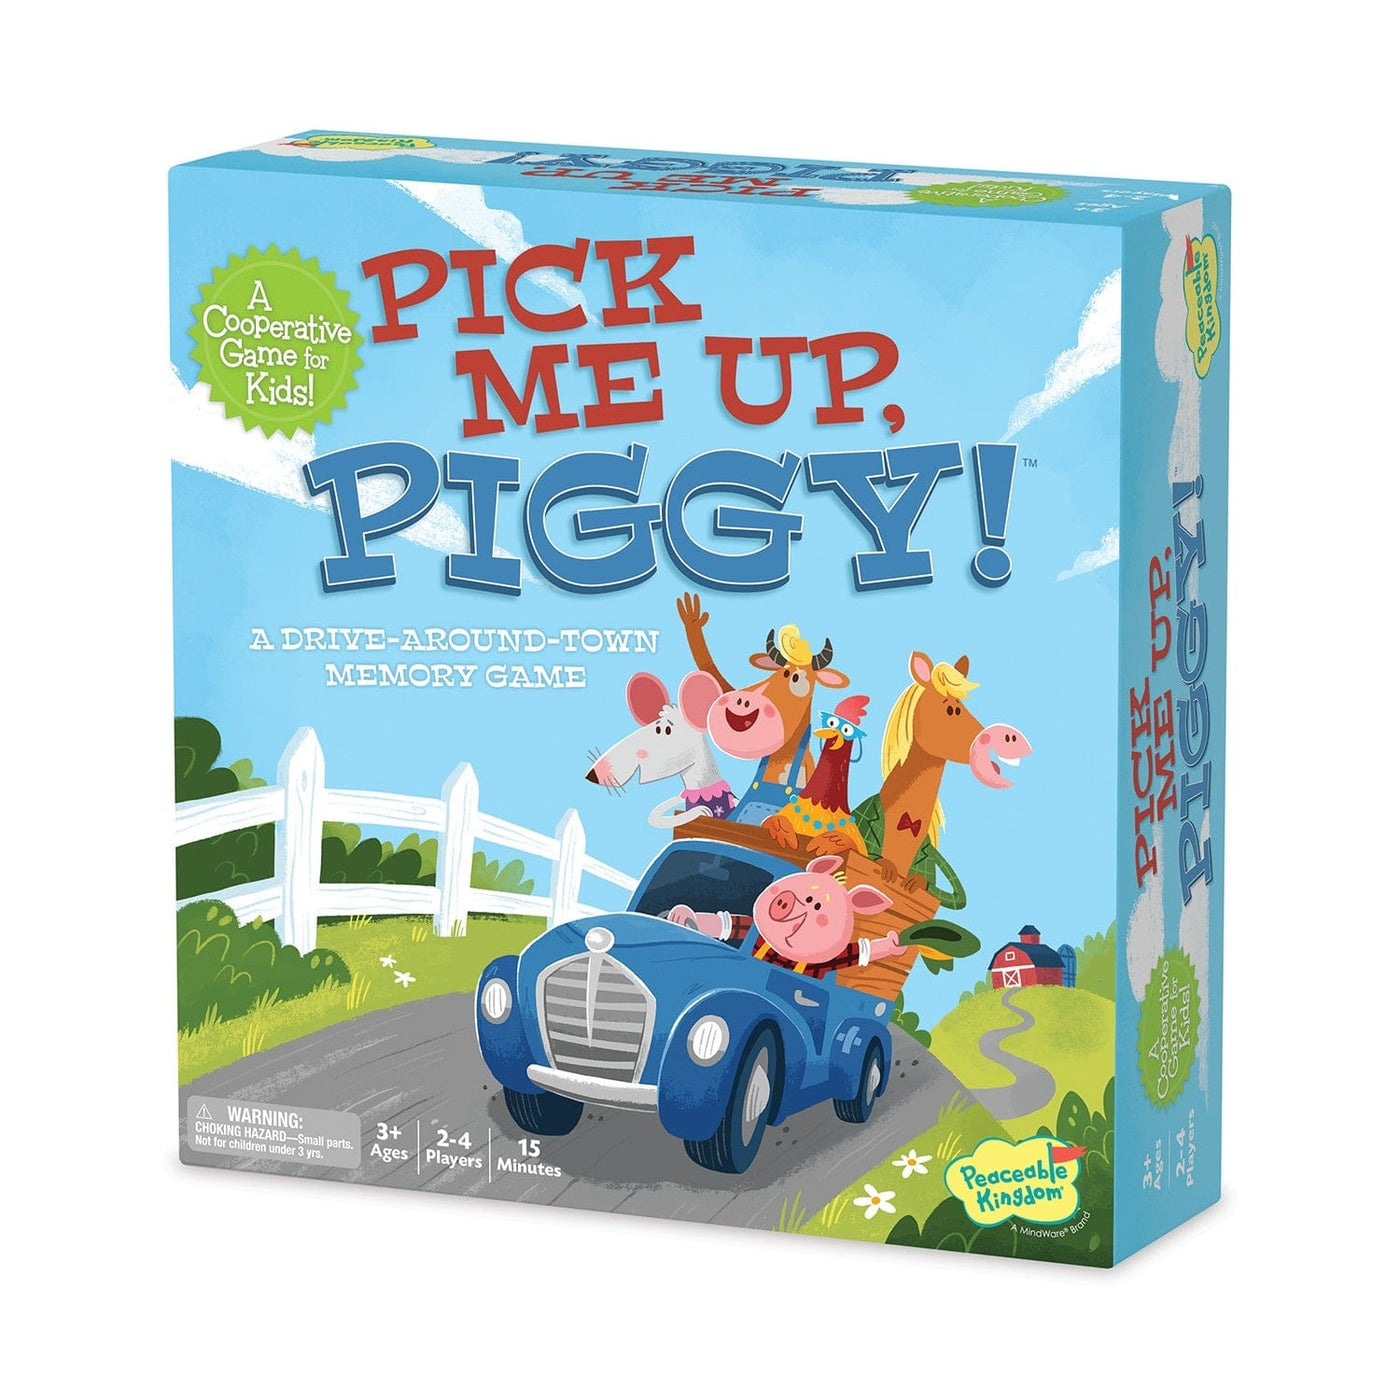 Peaceable Kingdom Board & Card Games Co-operative Game Pick Me Up Piggy